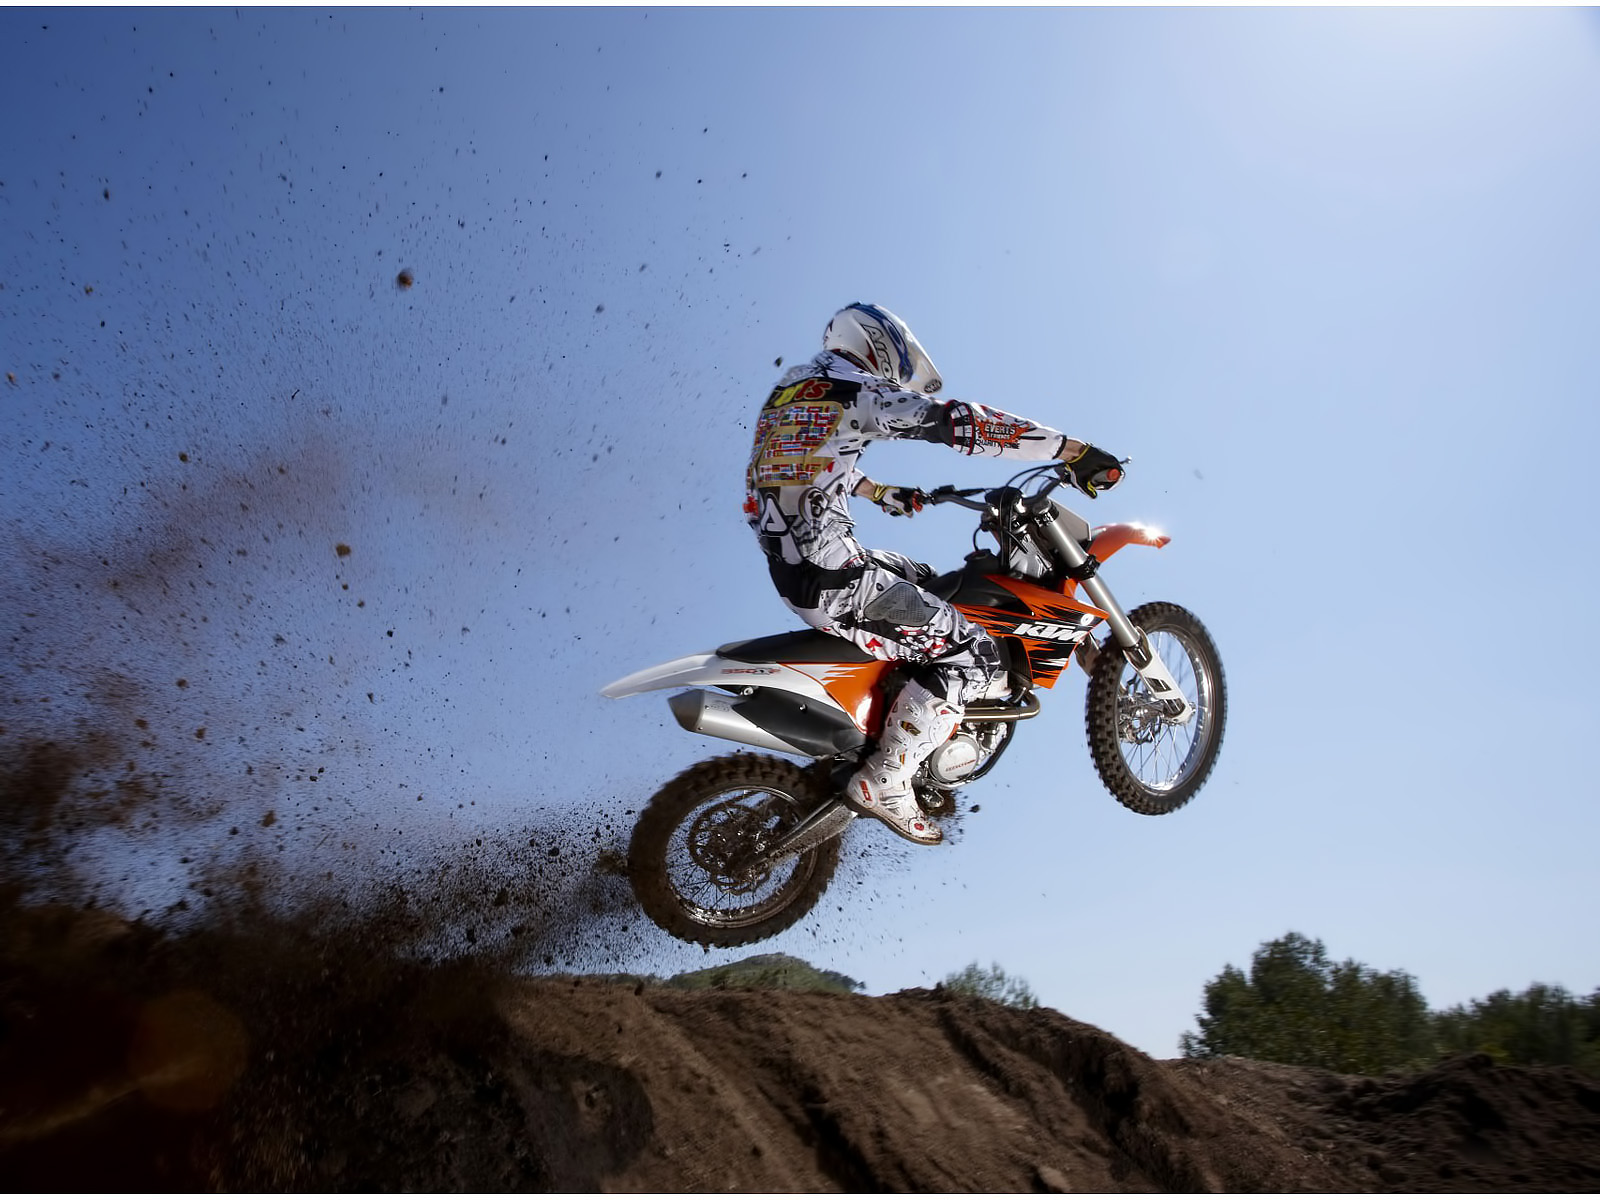 Download full size flight Motocross wallpaper / 1600x1200